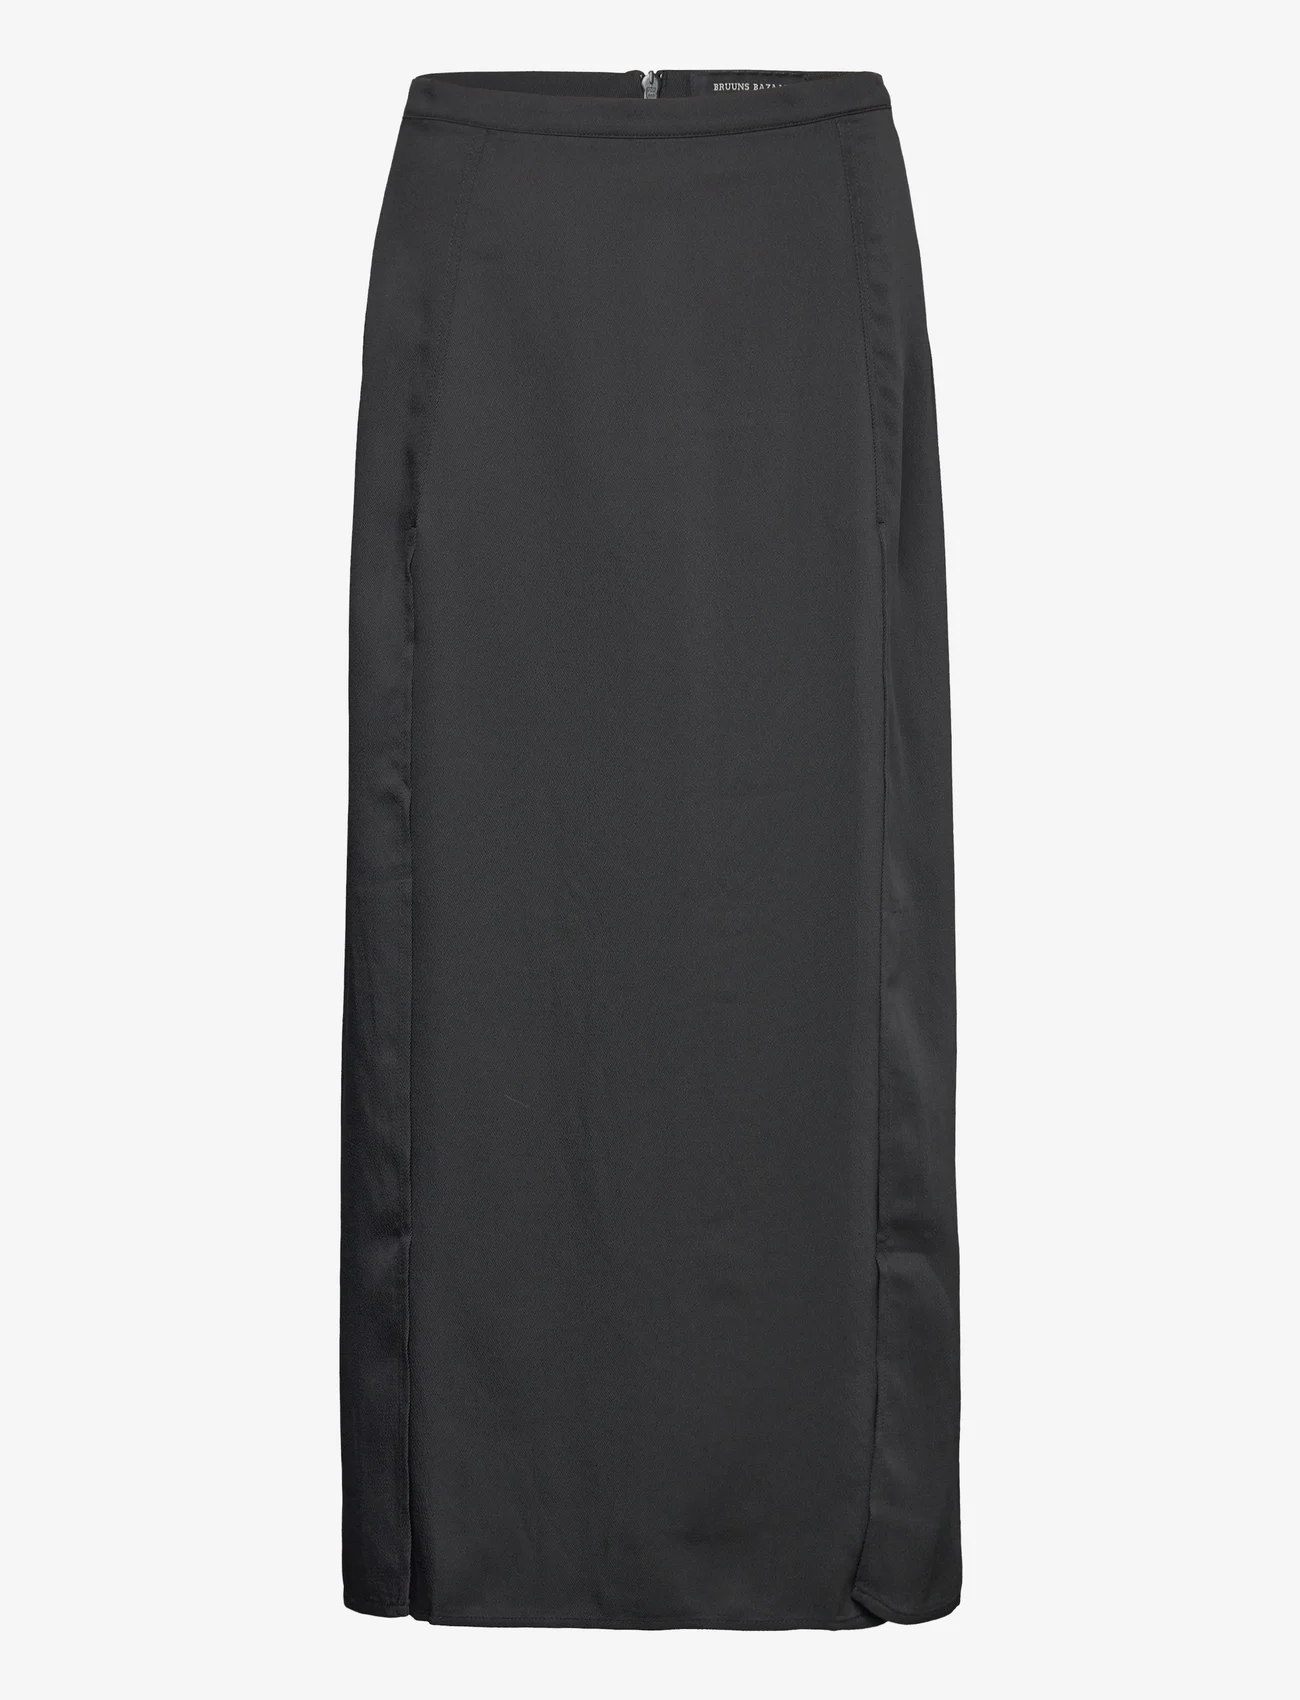 Bruuns Bazaar - CedarsBBMaian skirt - vidutinio ilgio sijonai - black - 0